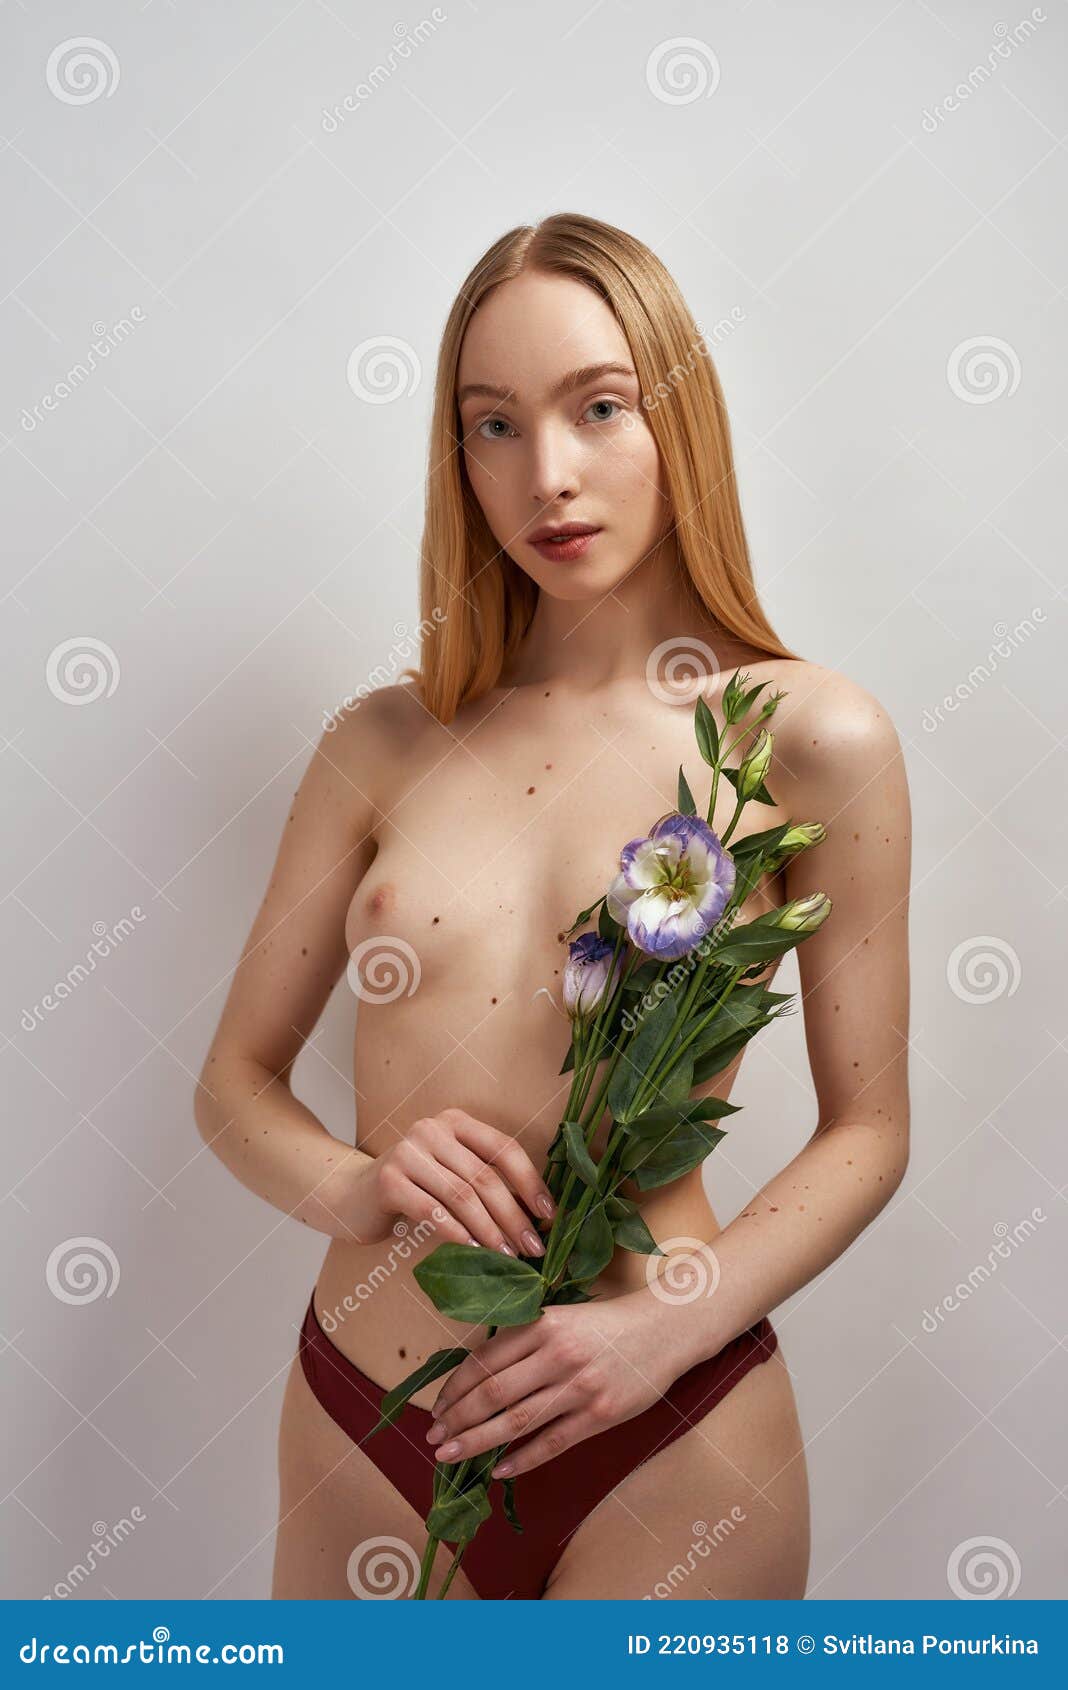 atul keshari add naked women and boobs photo